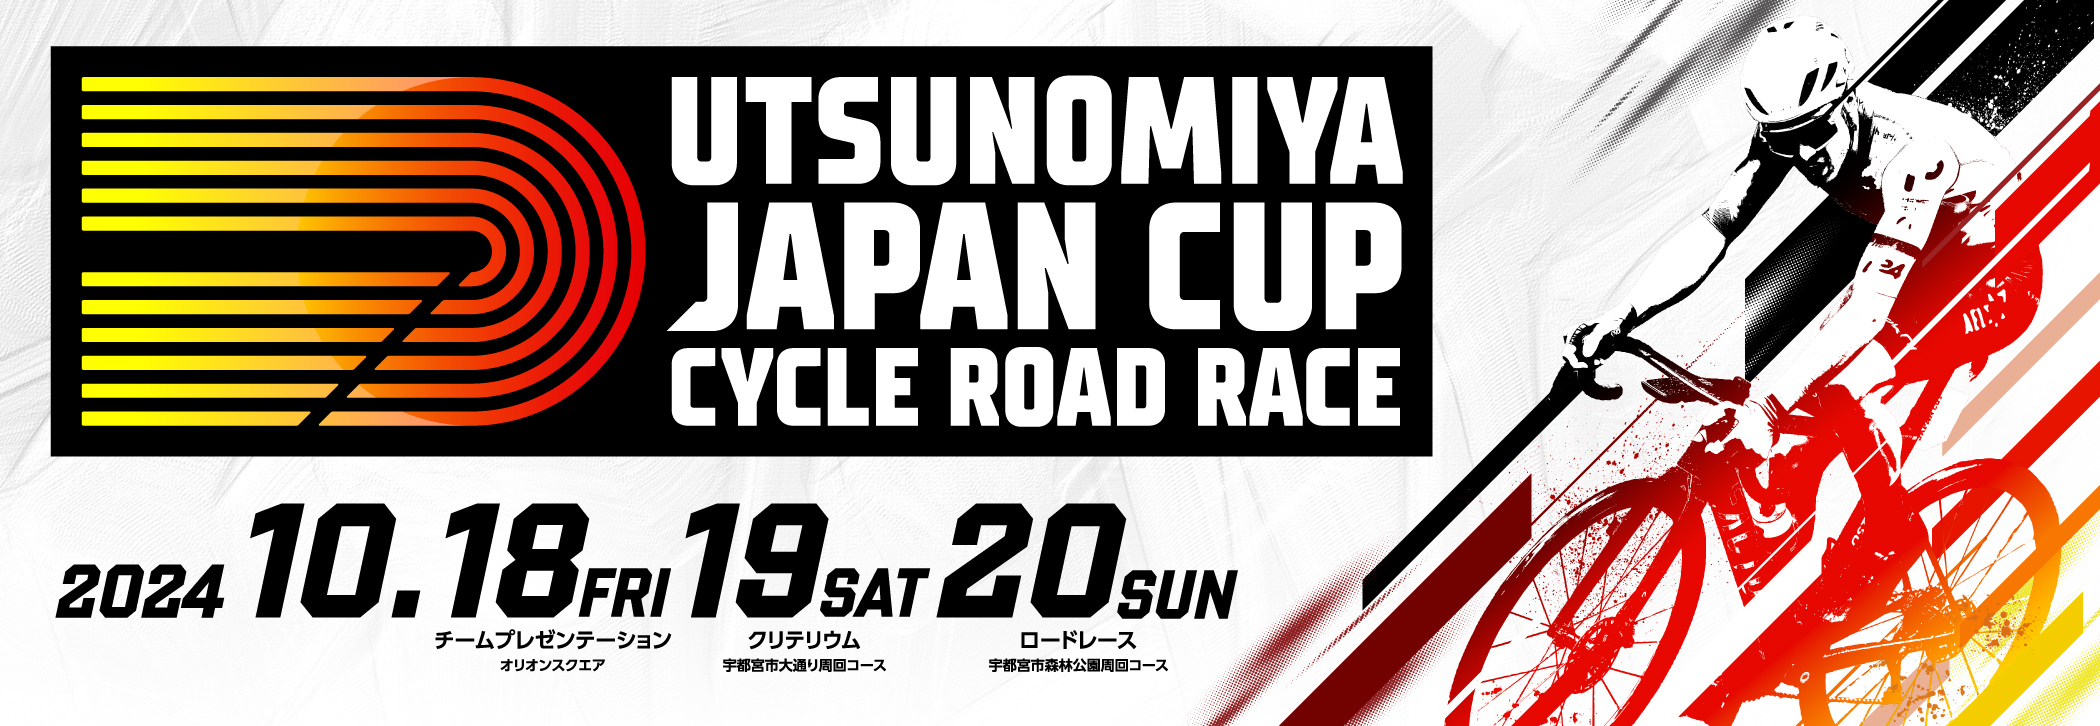 2024 UTSUNOMIYA JAPAN CUP CYCLE ROAD RACE